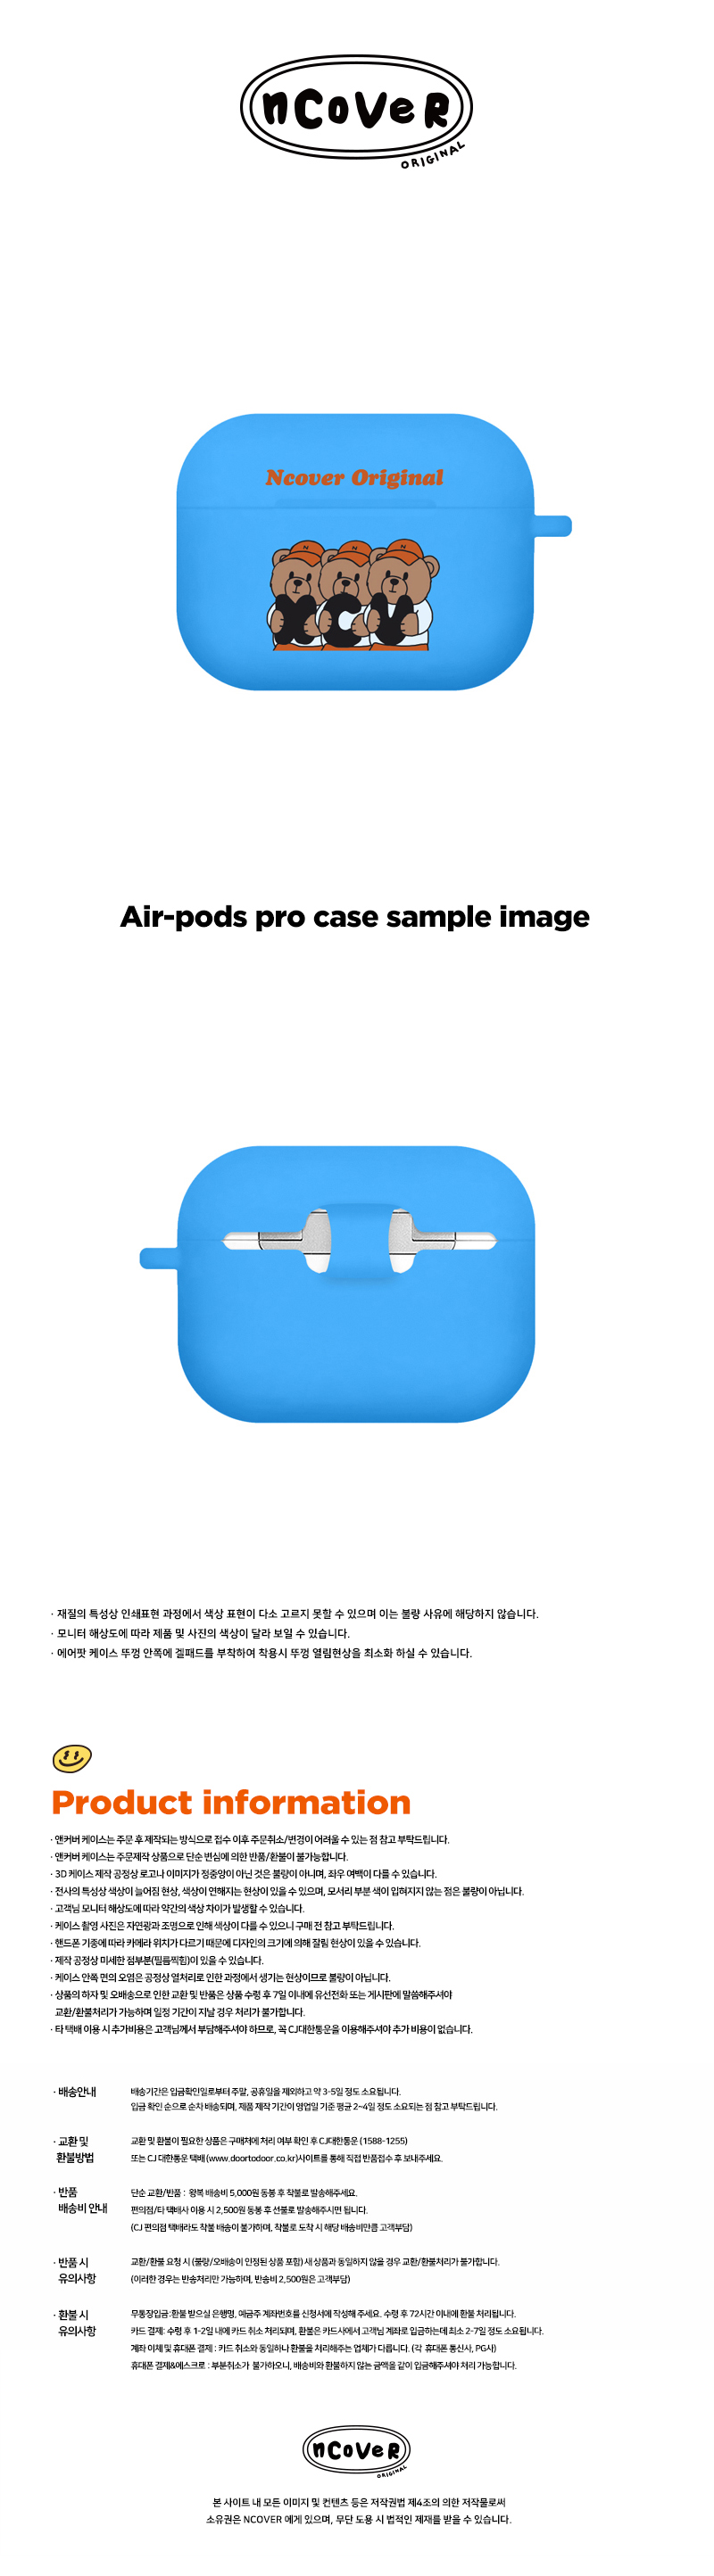  Ncv alphabet bruin-blue(airpods pro jelly)  15,000원 - 바이인터내셔널주식회사 디지털, 이어폰/헤드폰, 이어폰/헤드폰 액세서리, 에어팟/에어팟프로 케이스 바보사랑  Ncv alphabet bruin-blue(airpods pro jelly)  15,000원 - 바이인터내셔널주식회사 디지털, 이어폰/헤드폰, 이어폰/헤드폰 액세서리, 에어팟/에어팟프로 케이스 바보사랑